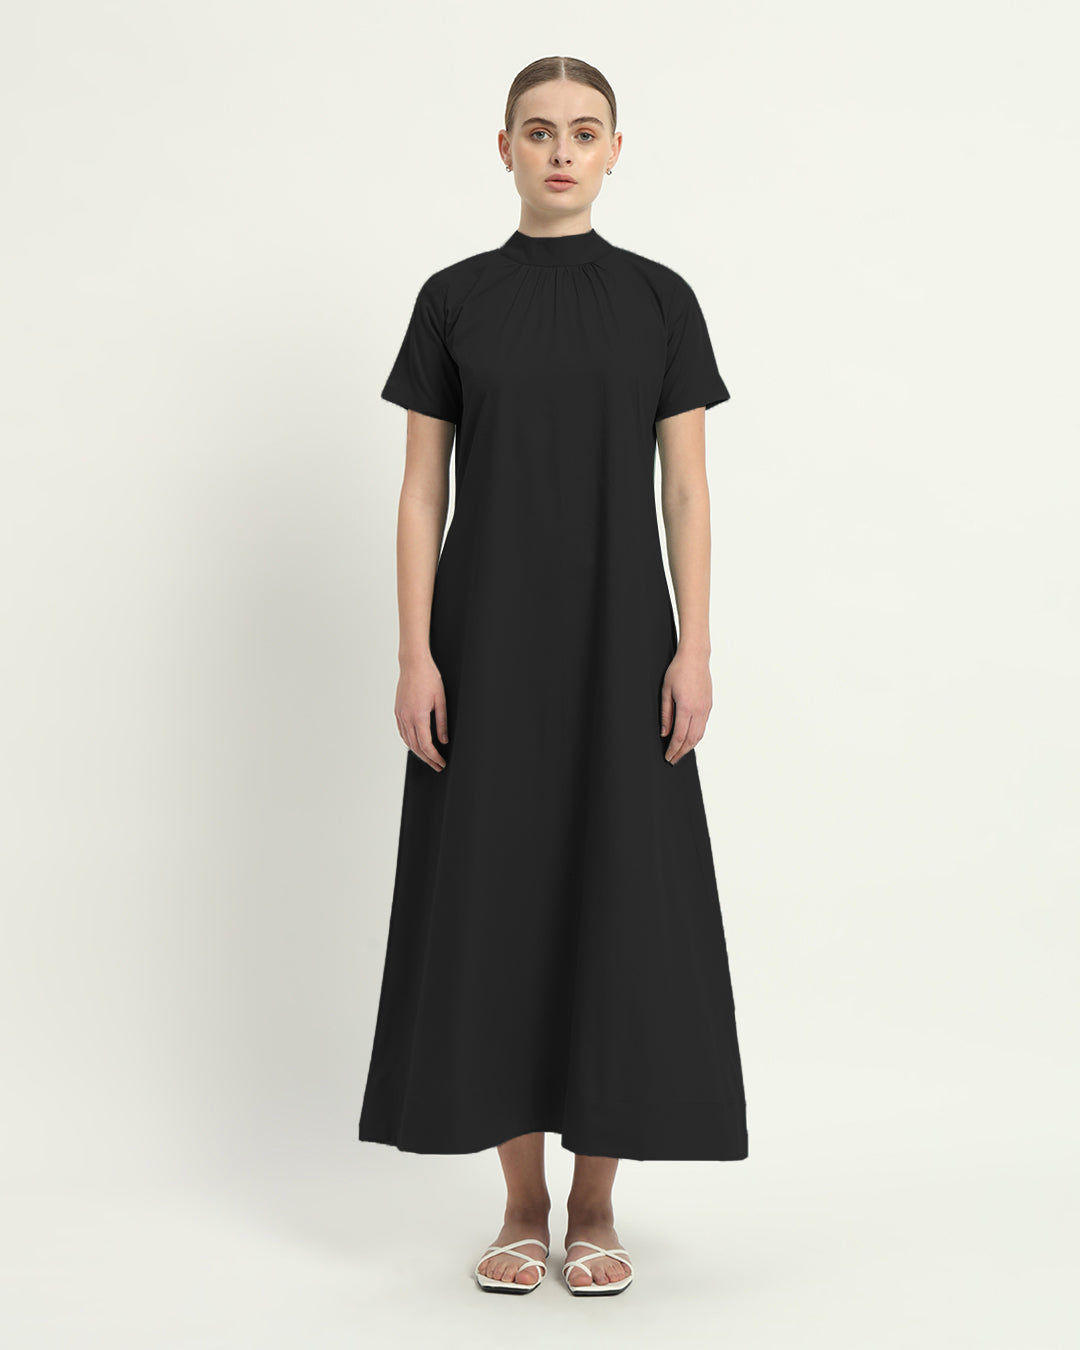 The Hermon Noir Cotton Dress